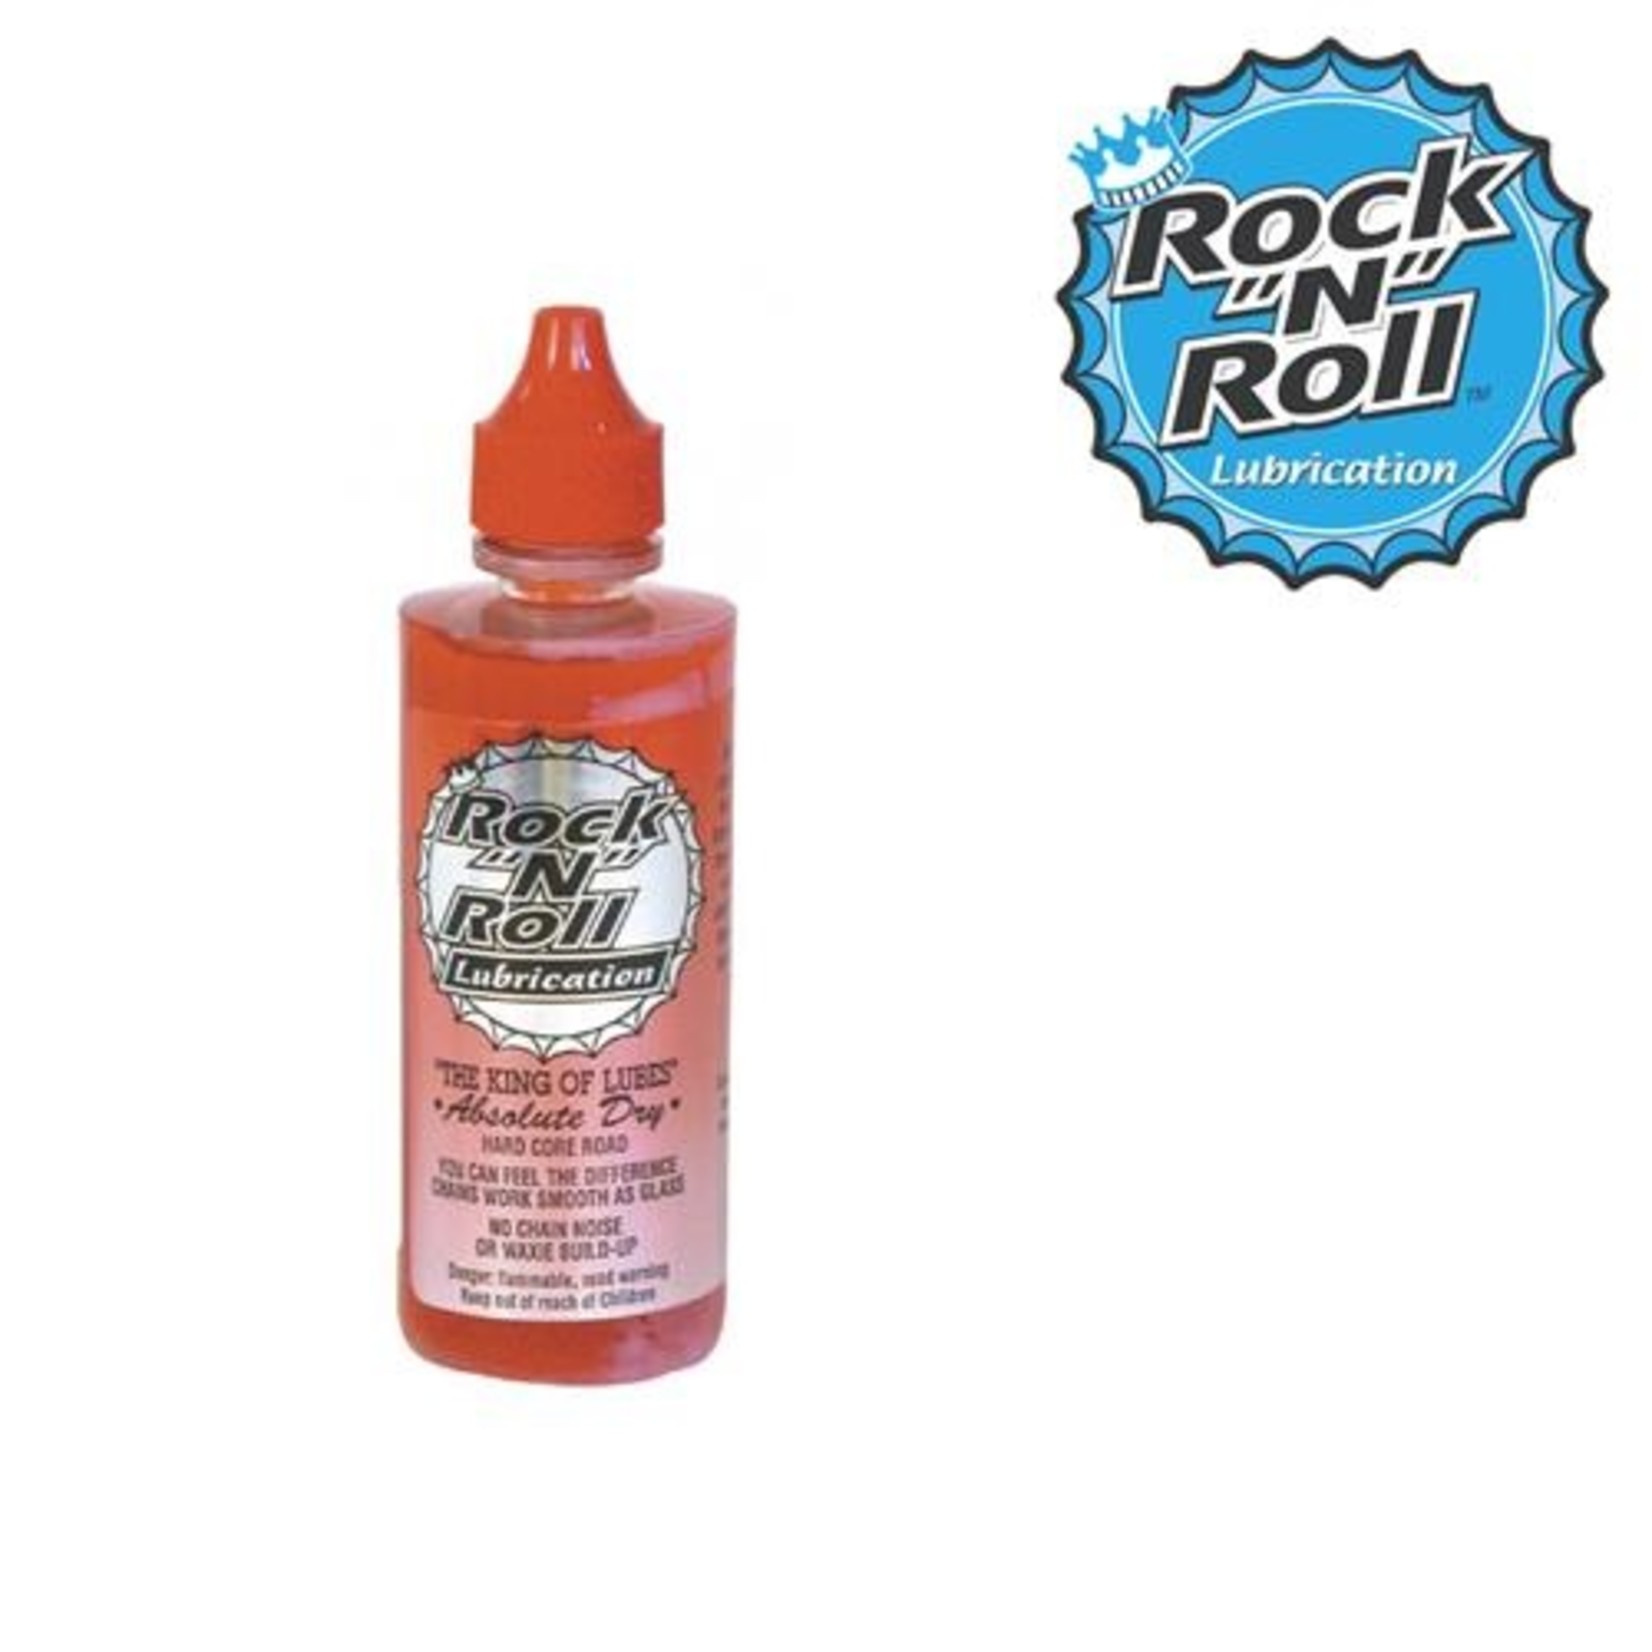 Rock'n'Roll Rock N Roll Bike/Cycling Chain Lube - Absolute Dry - 118ml